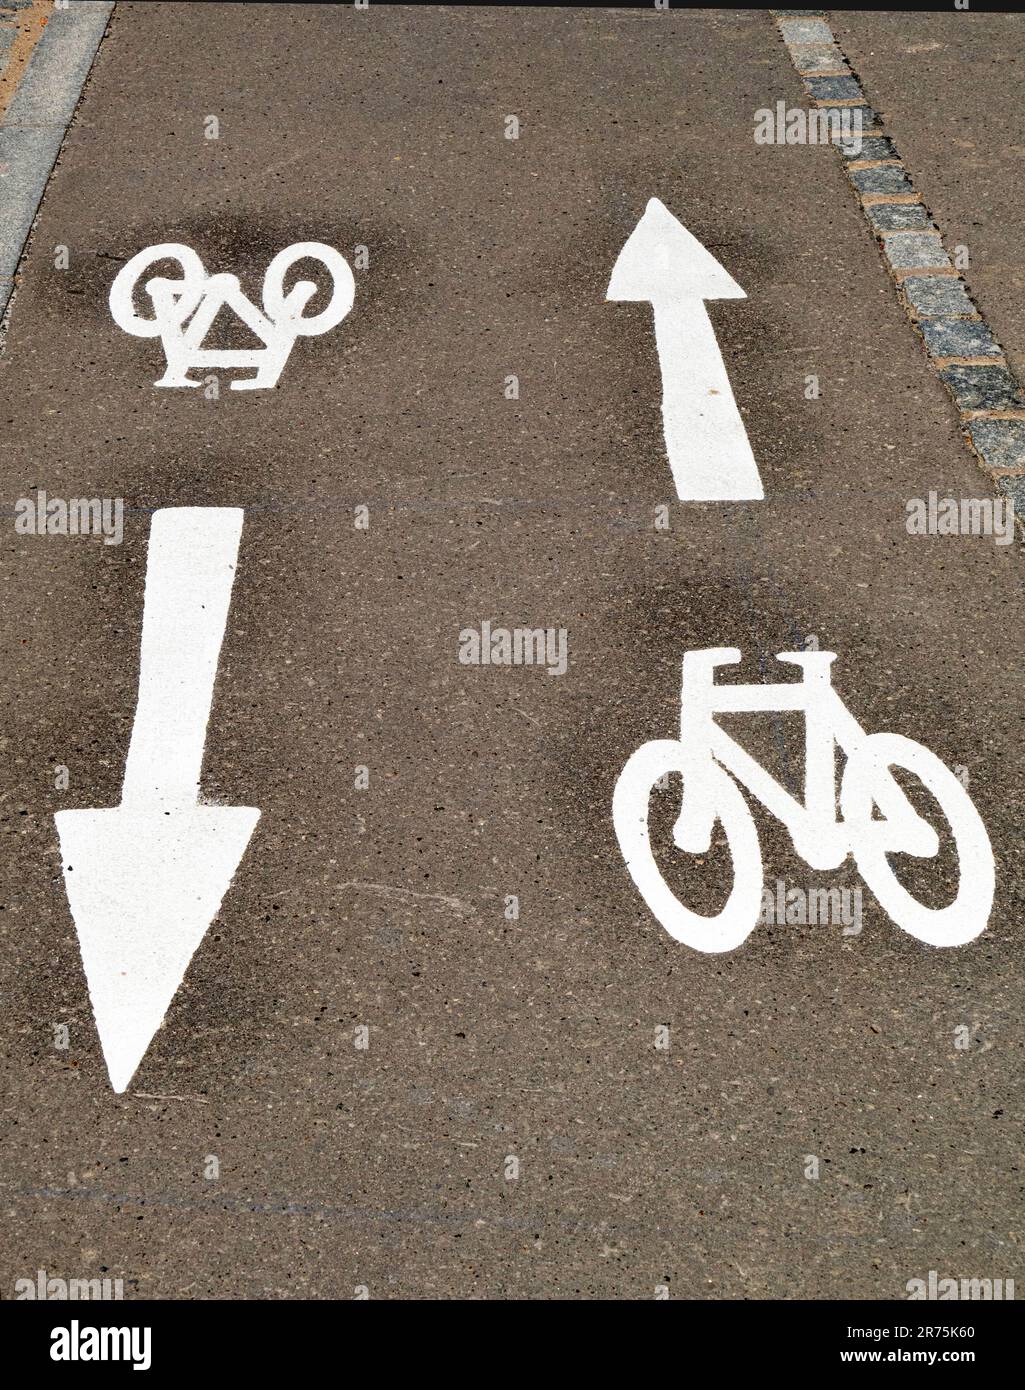 Signalisation cycliste sur le Kirchberg, Luxembourg, Benelux, pays du Benelux, Luxembourg Banque D'Images